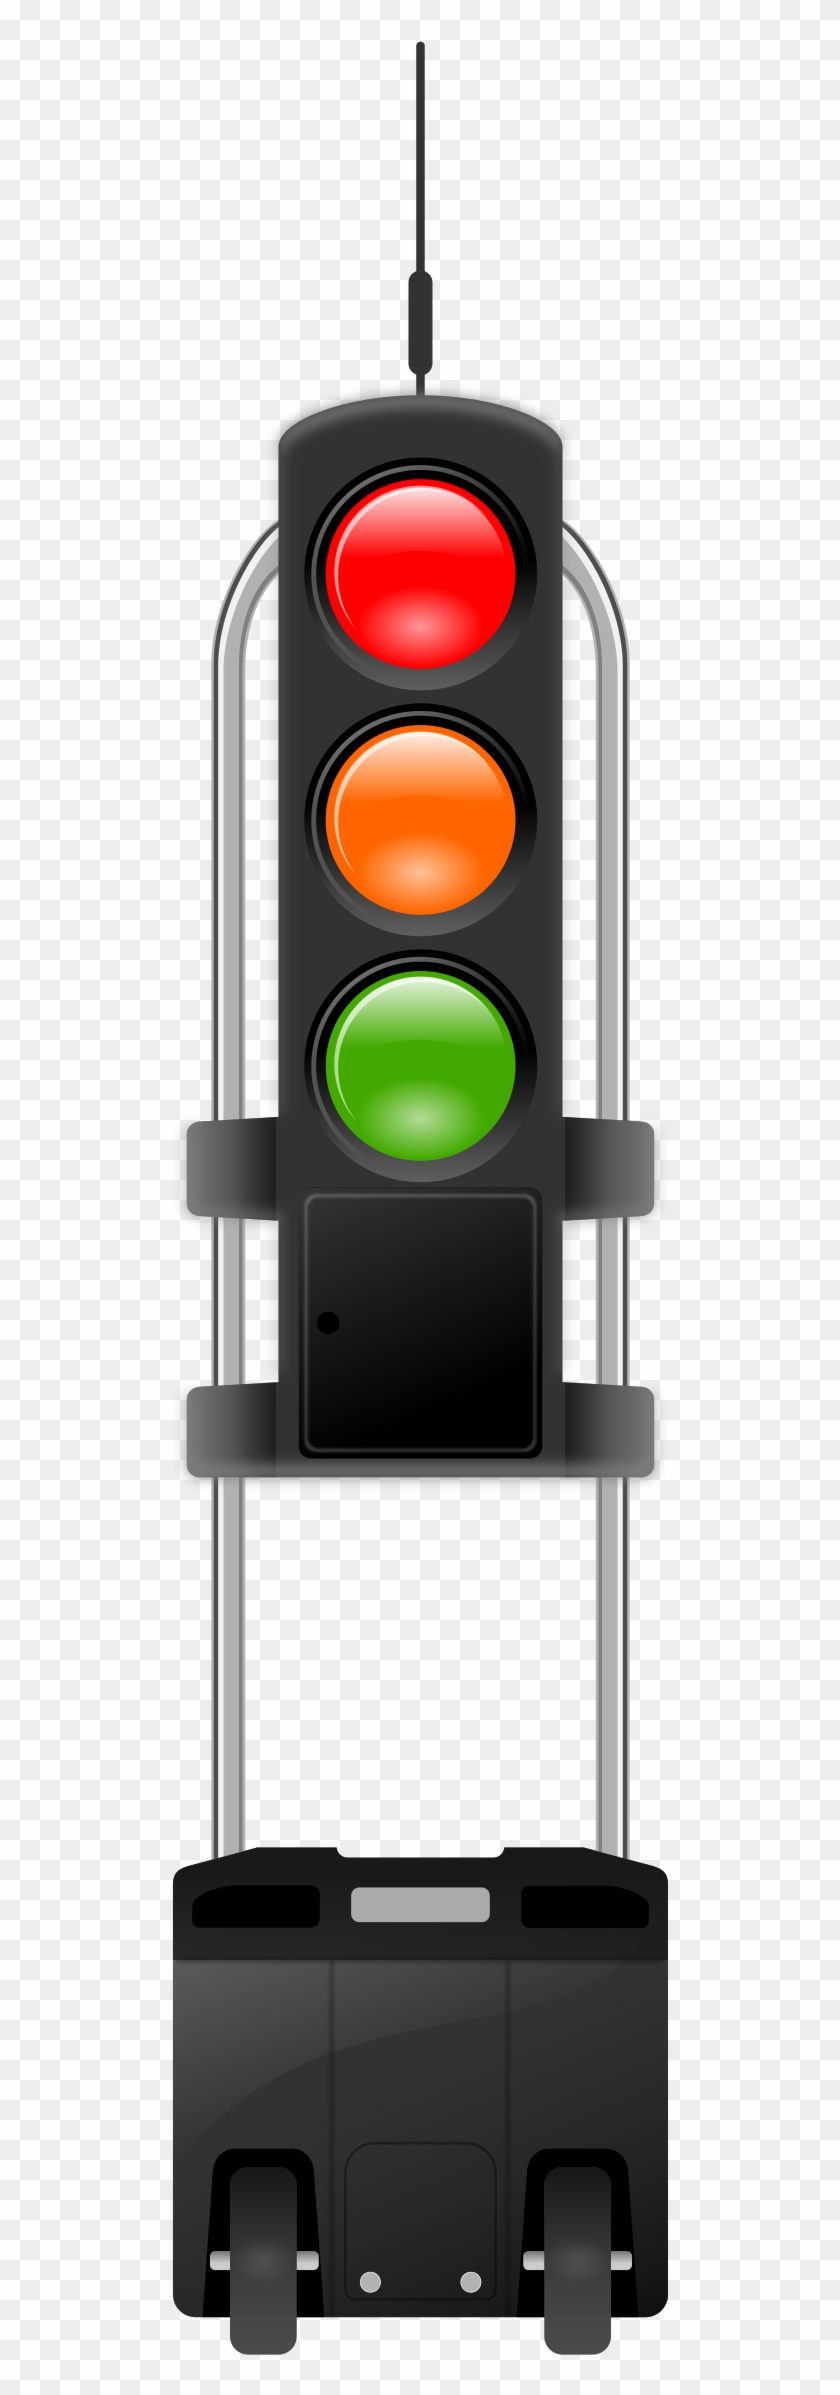 Traffic Light Traffic Sign Roadworks Clip Art - Traffic Light Traffic Sign Roadworks Clip Art #294259